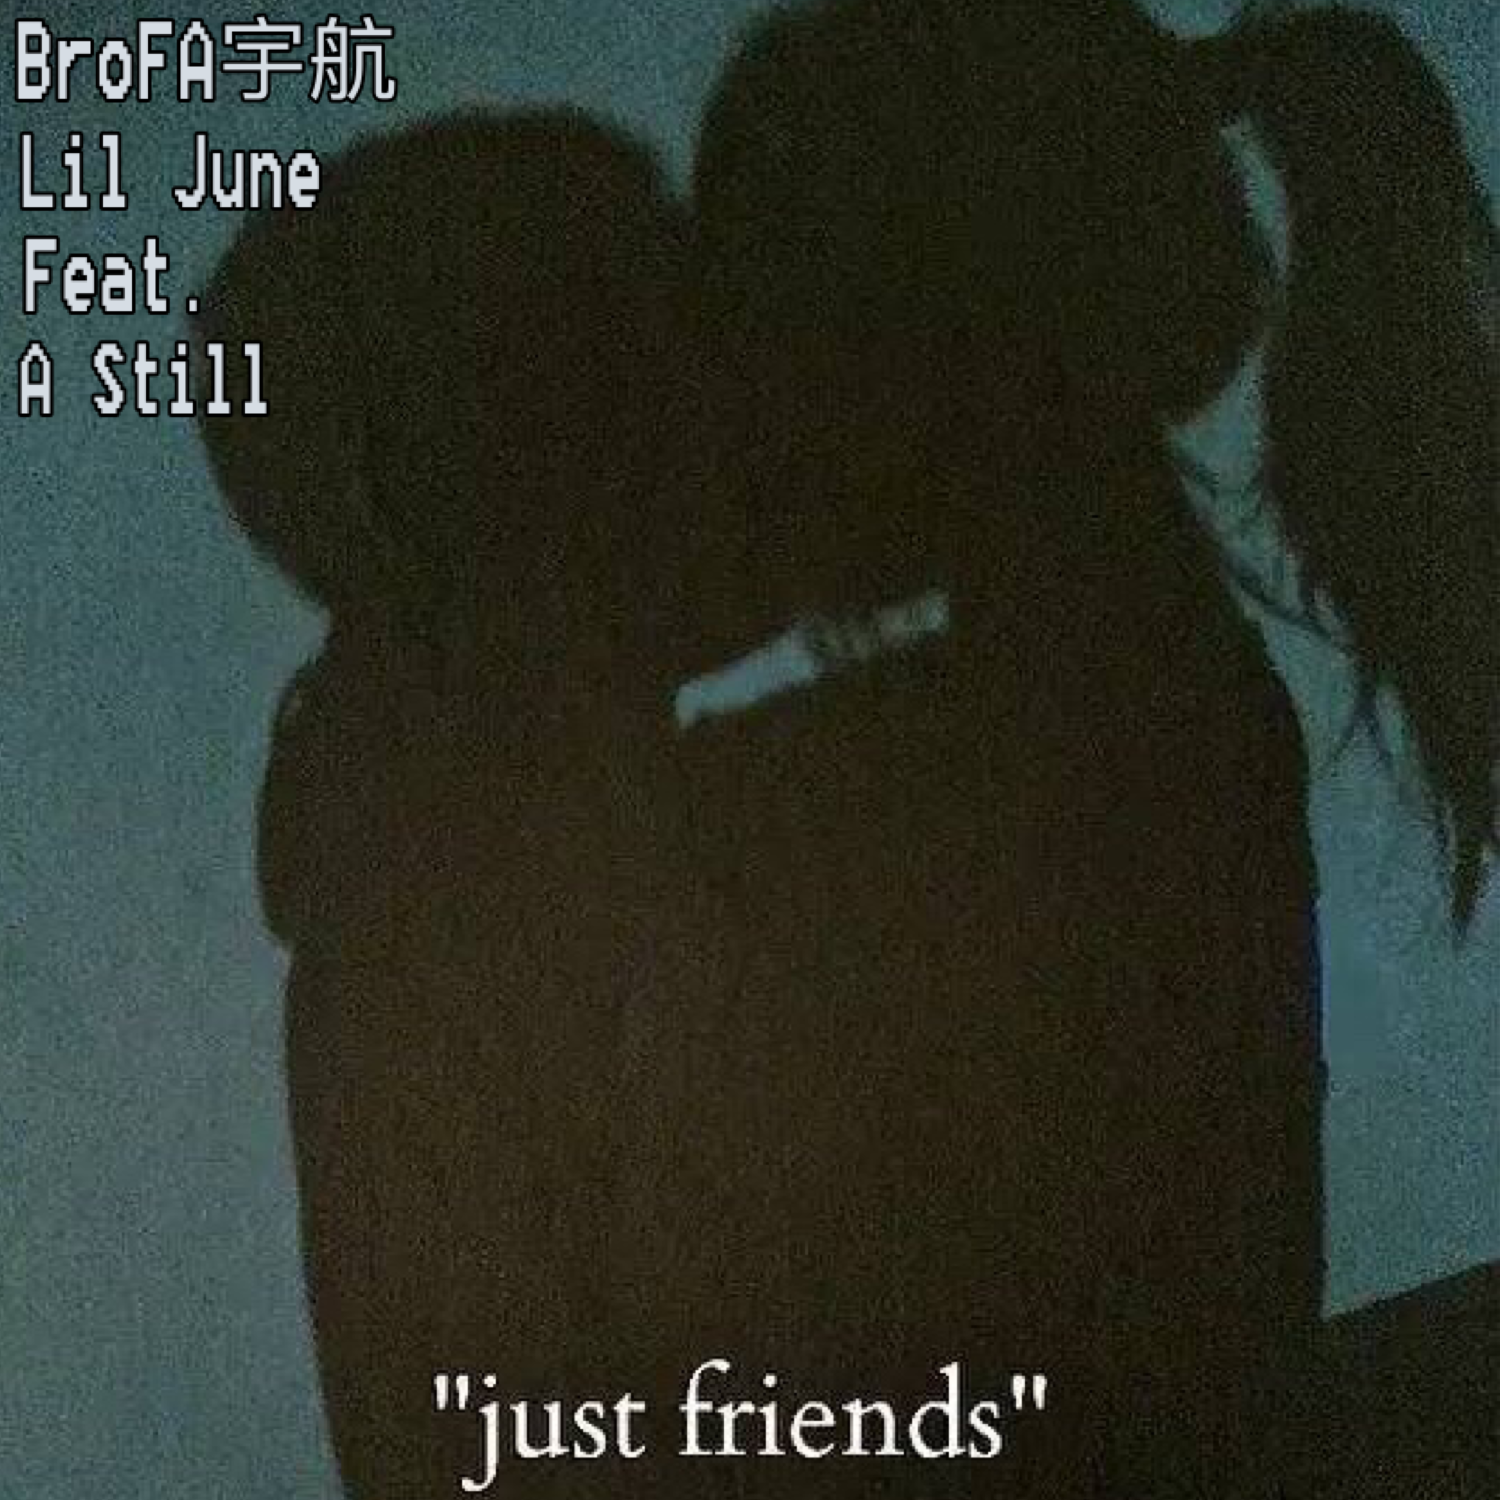 Just Friend